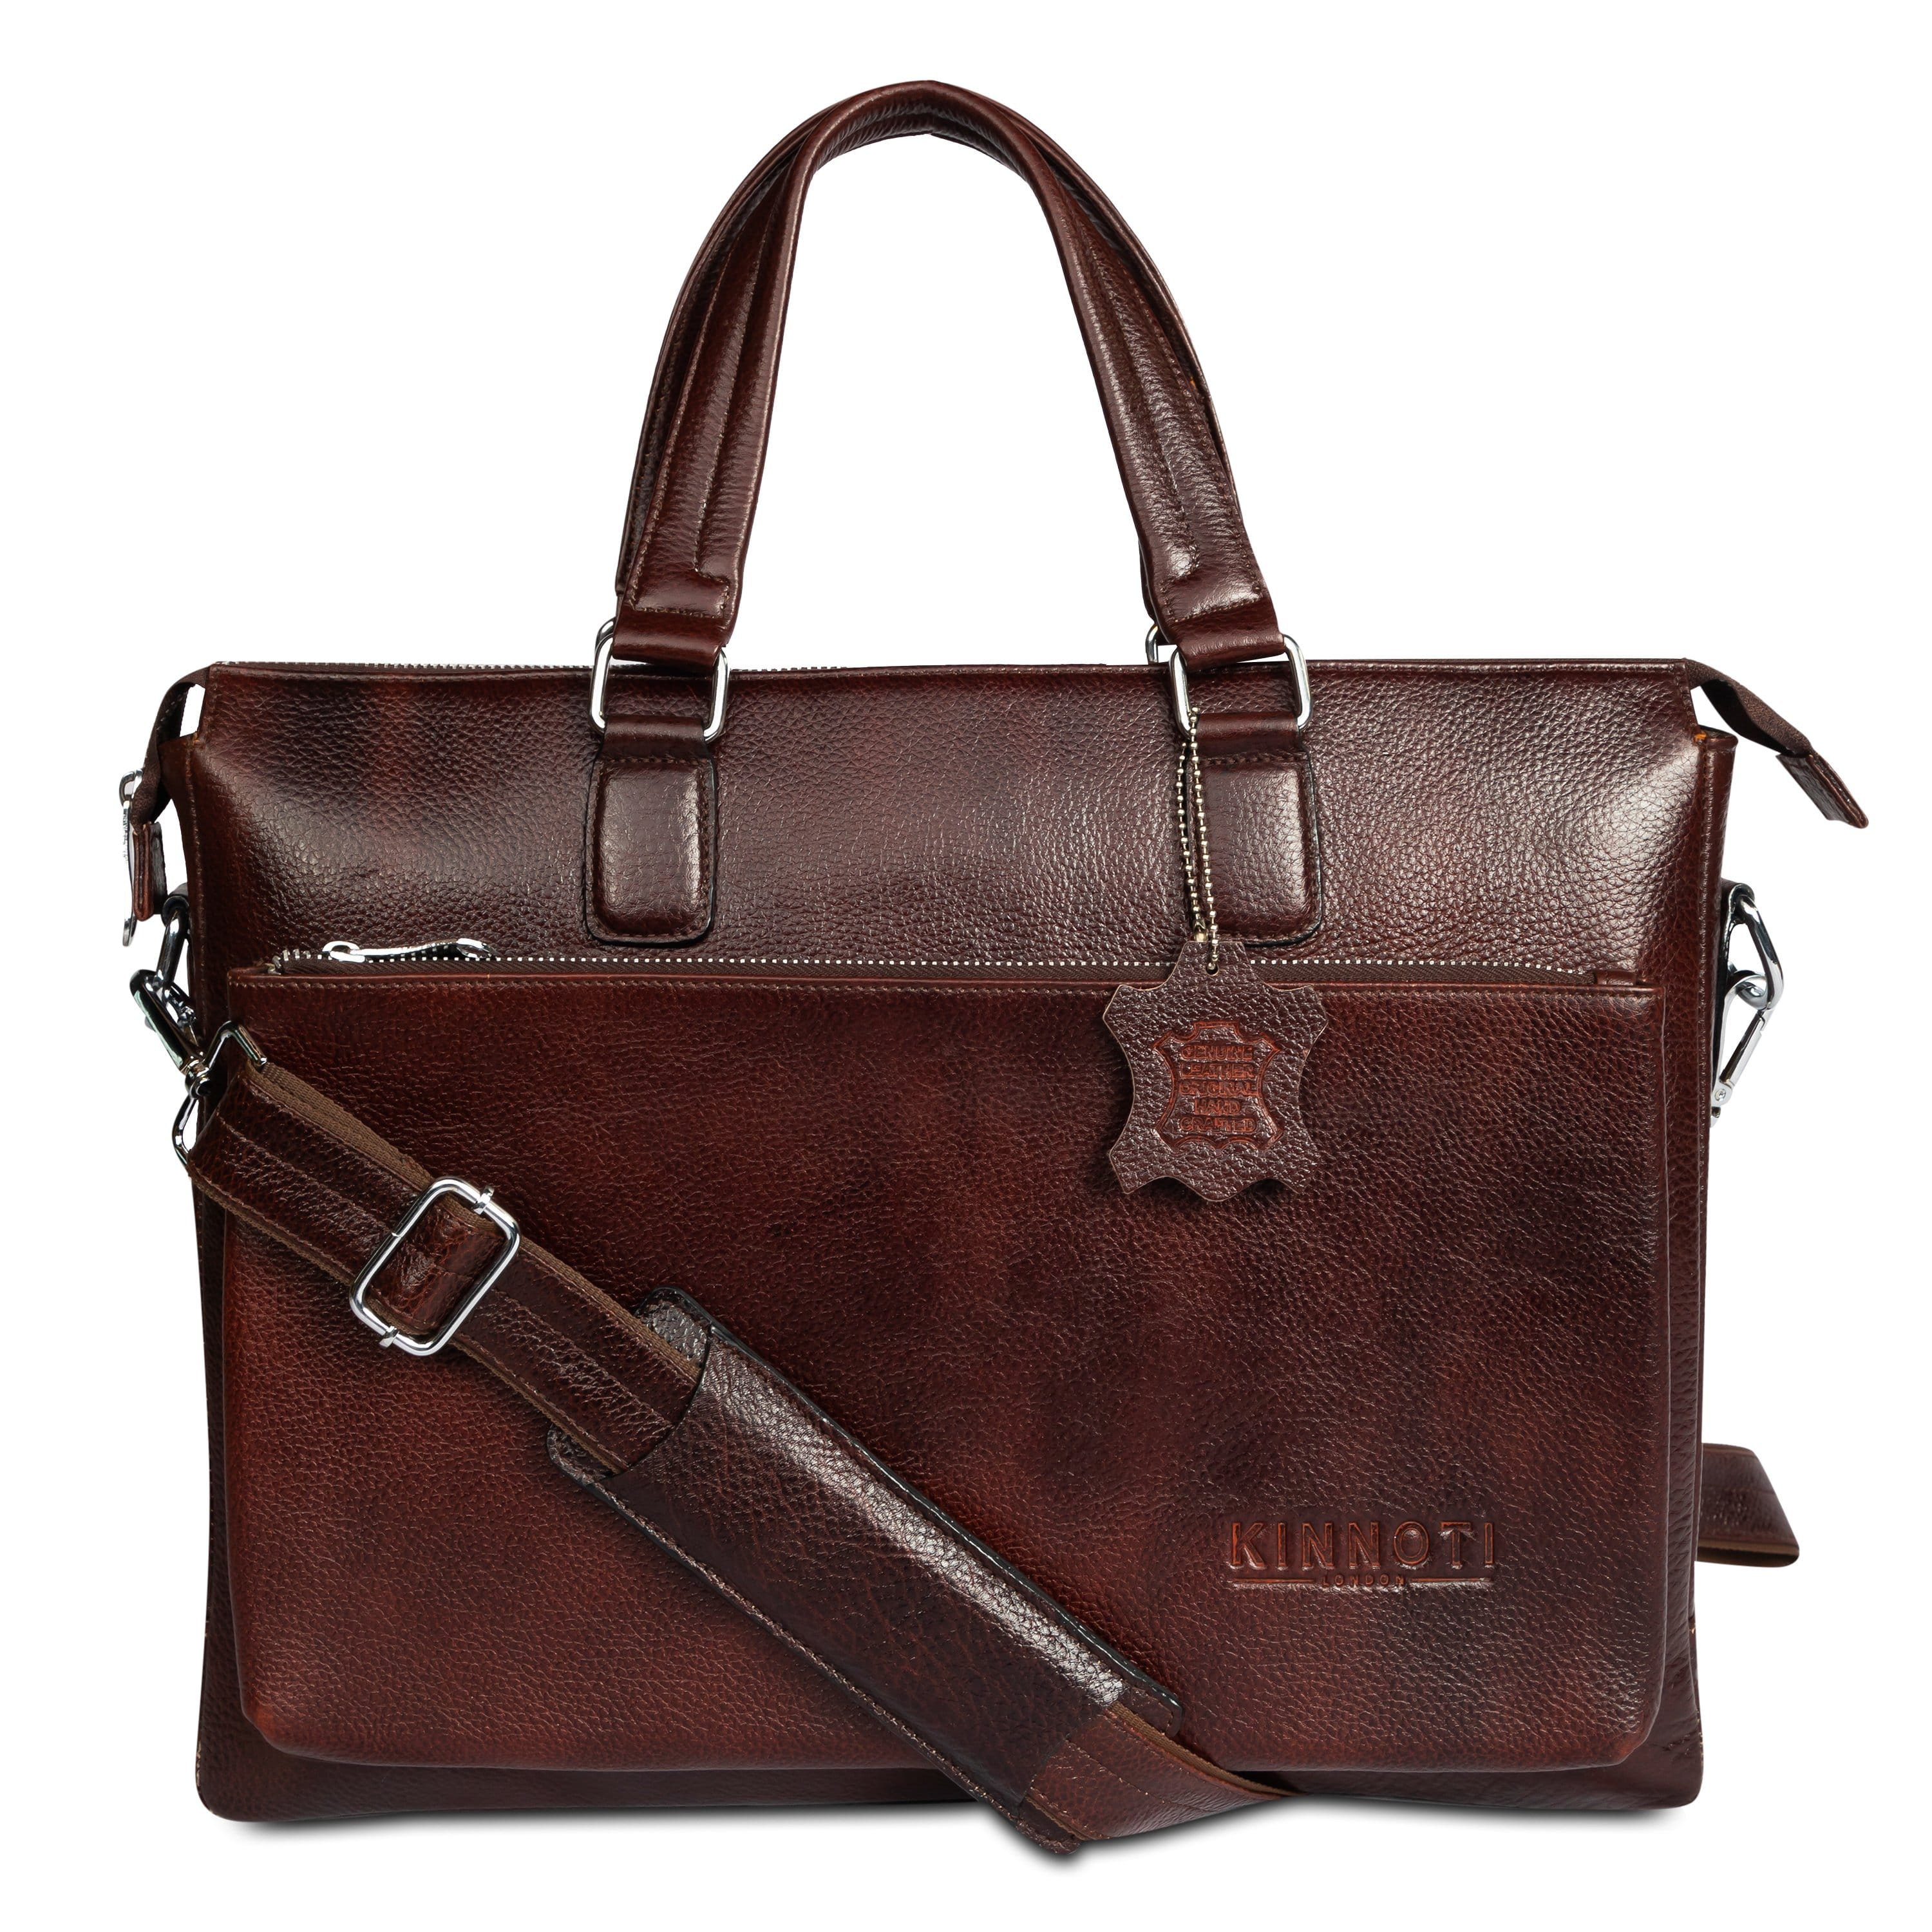 kinnoti LAPTOP BAGS Wine-Brown Men Solid Genuine Leather Laptop Bag